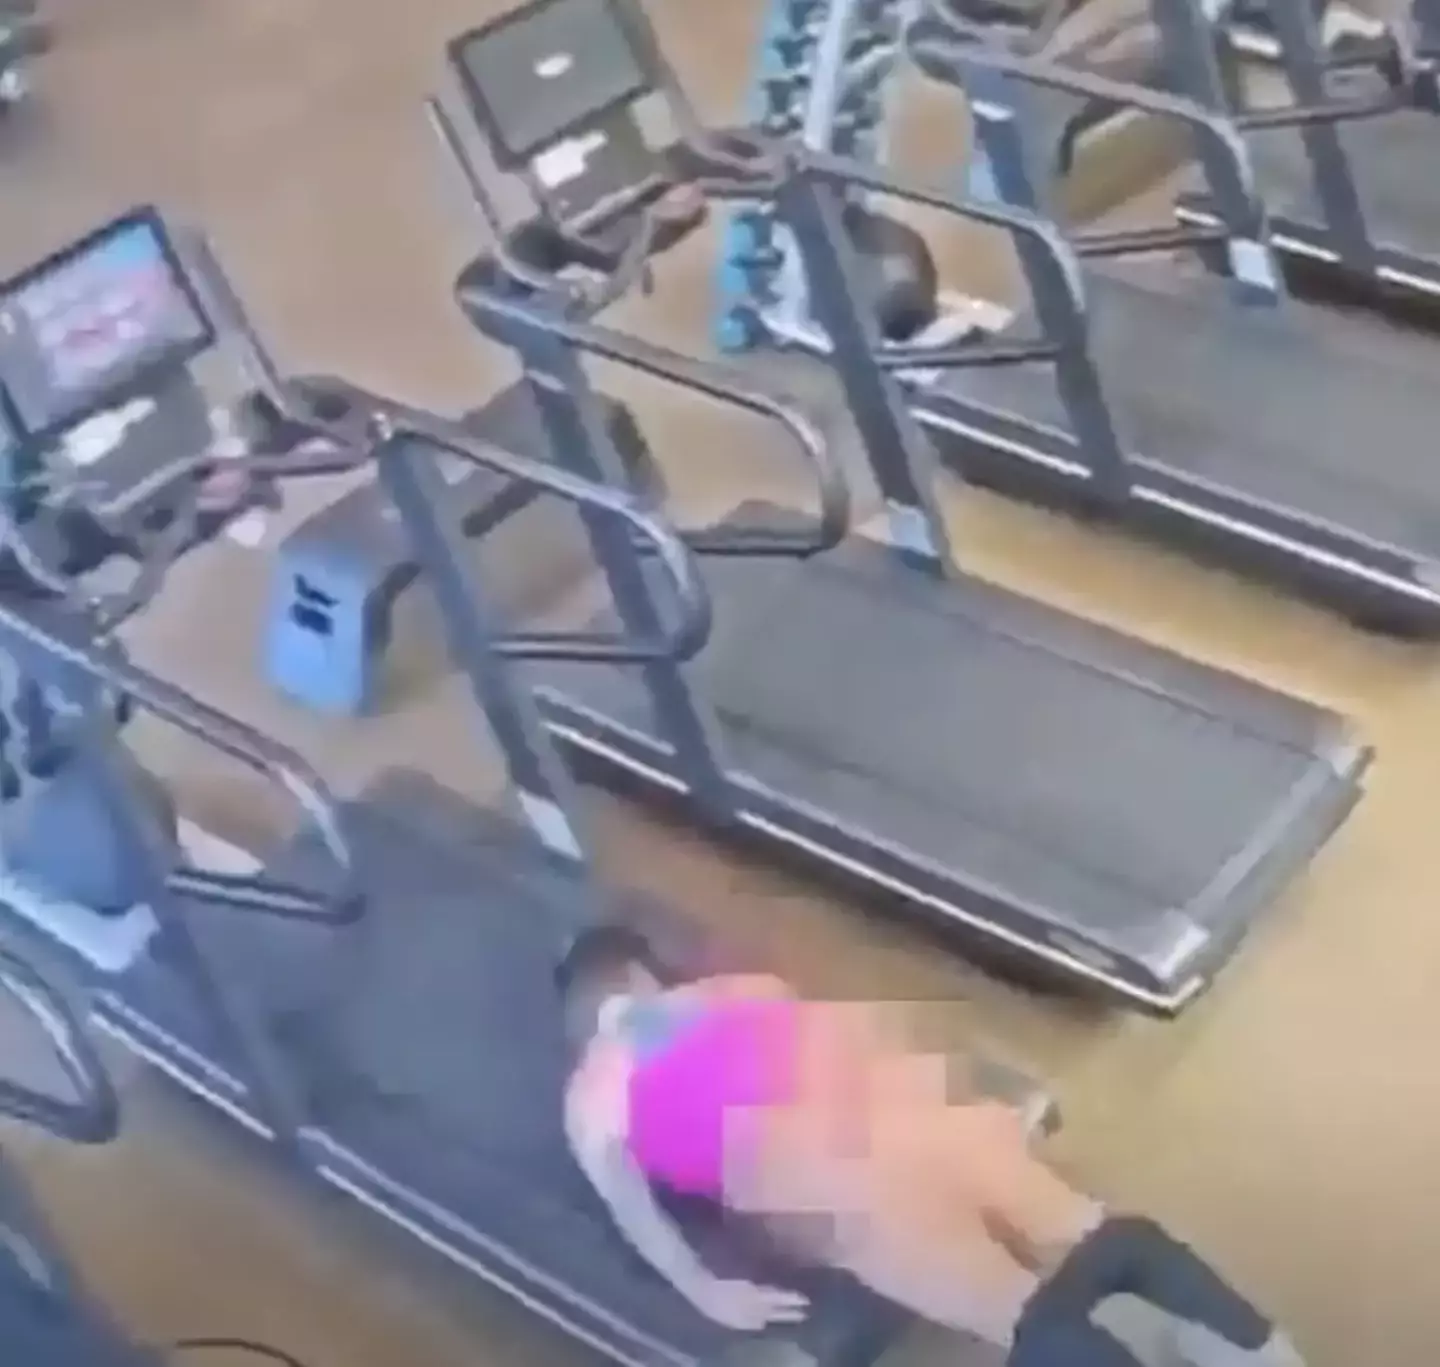 Alyssa has actually fell off the treadmill before.